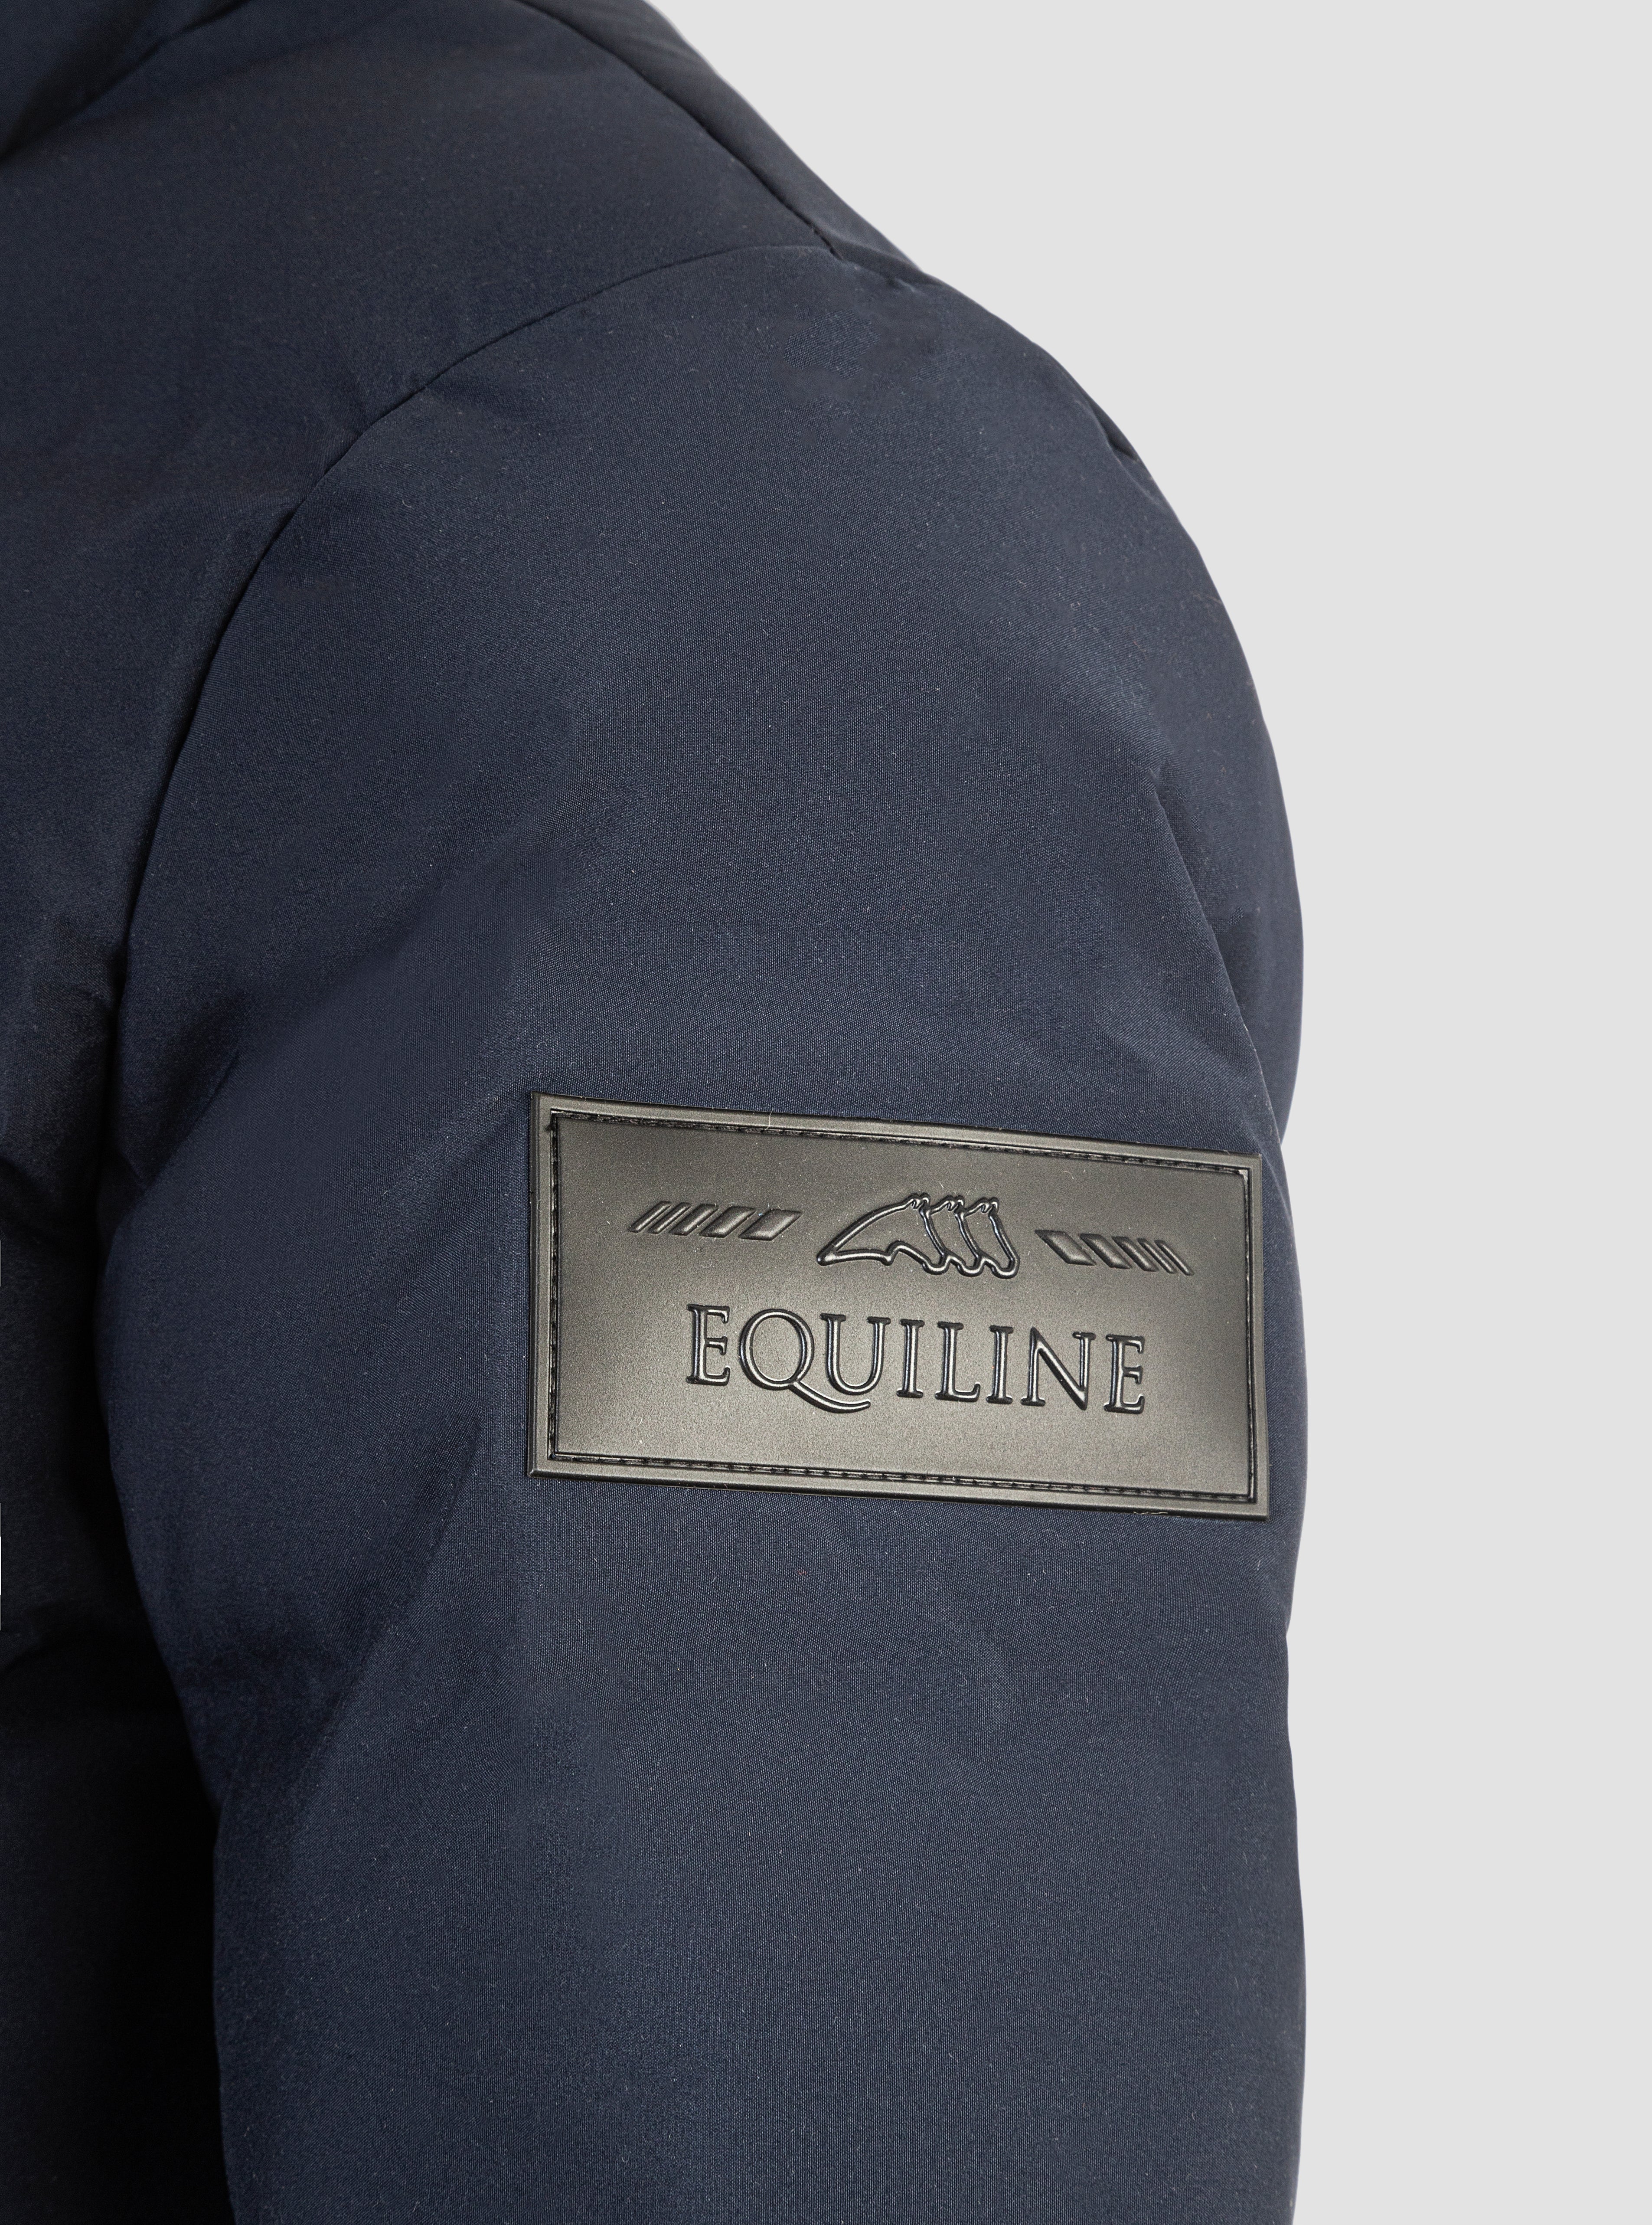 Equiline Cadoc Navy Puffer Coat